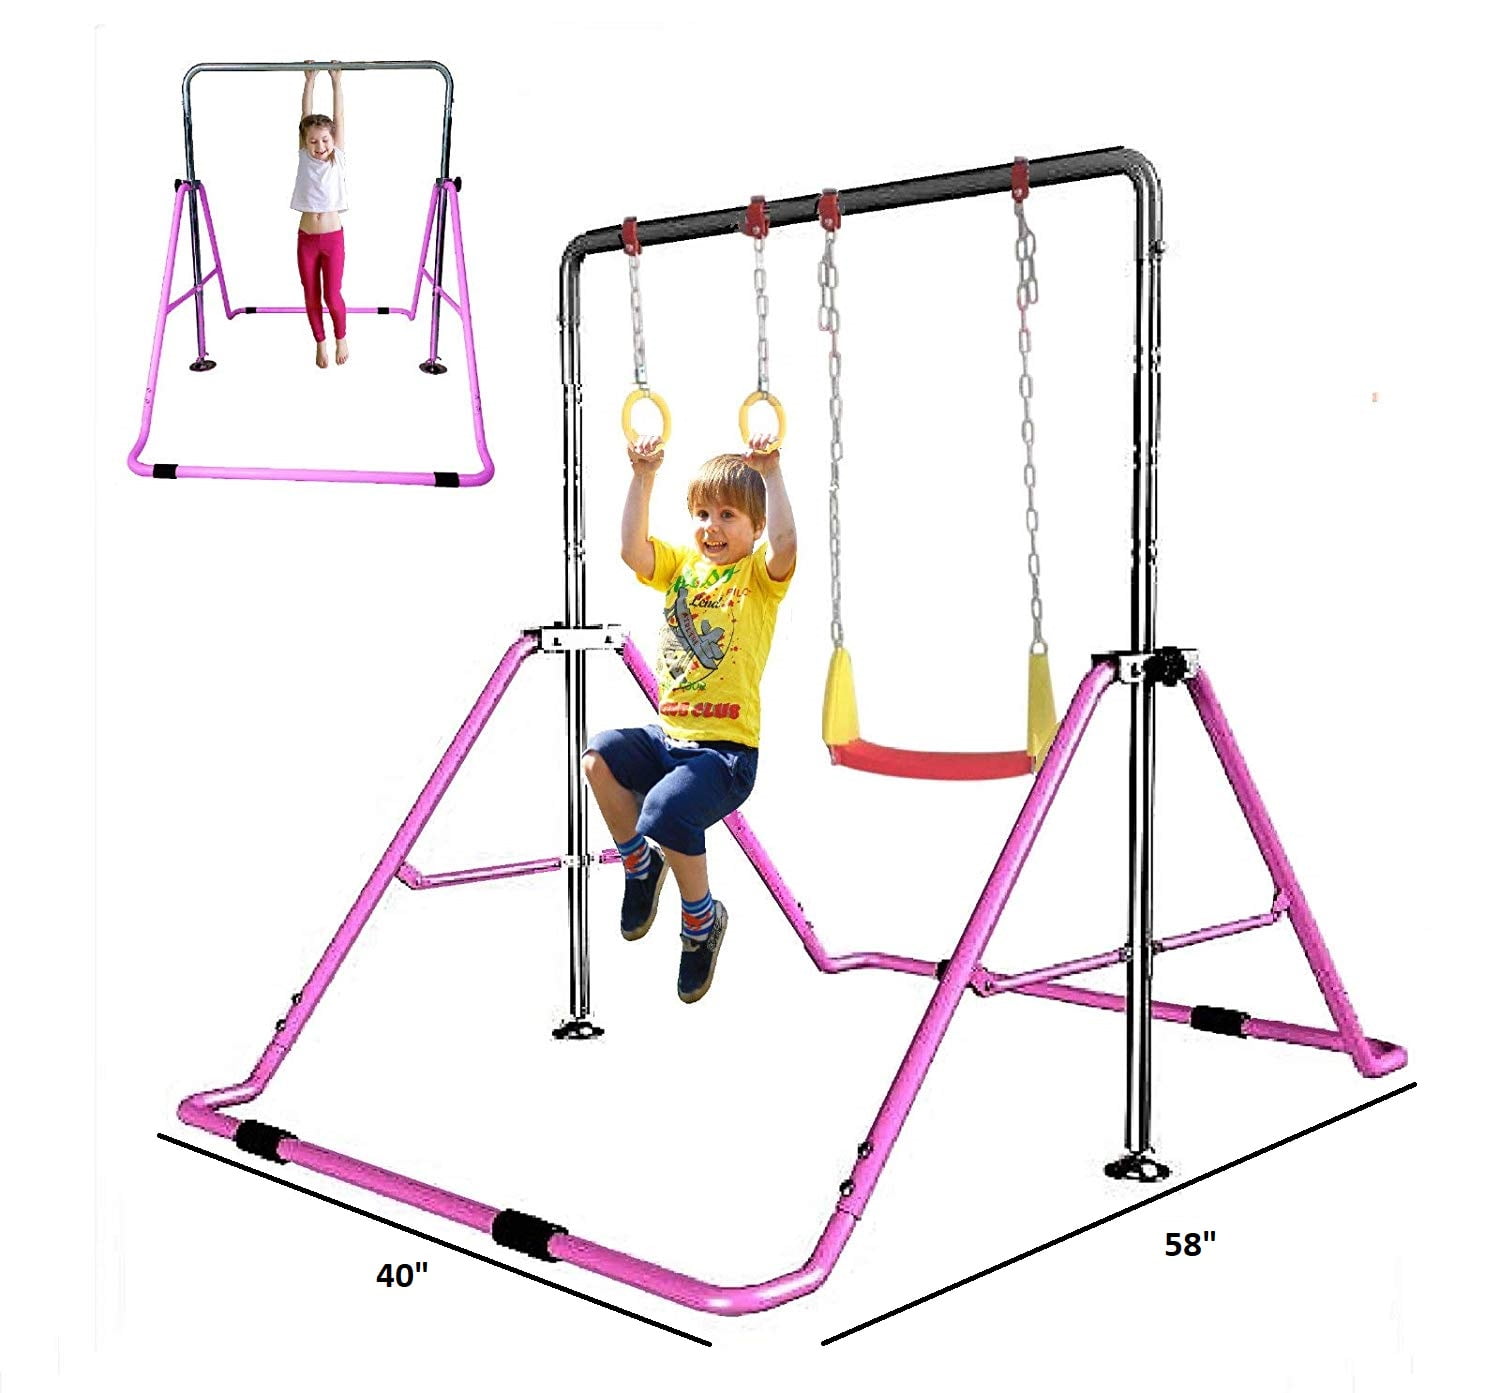 ToyKraft Kids Gymnastics Bar Jungle Gym 4 in 1 Playground Swing Set Trapeze Ring 